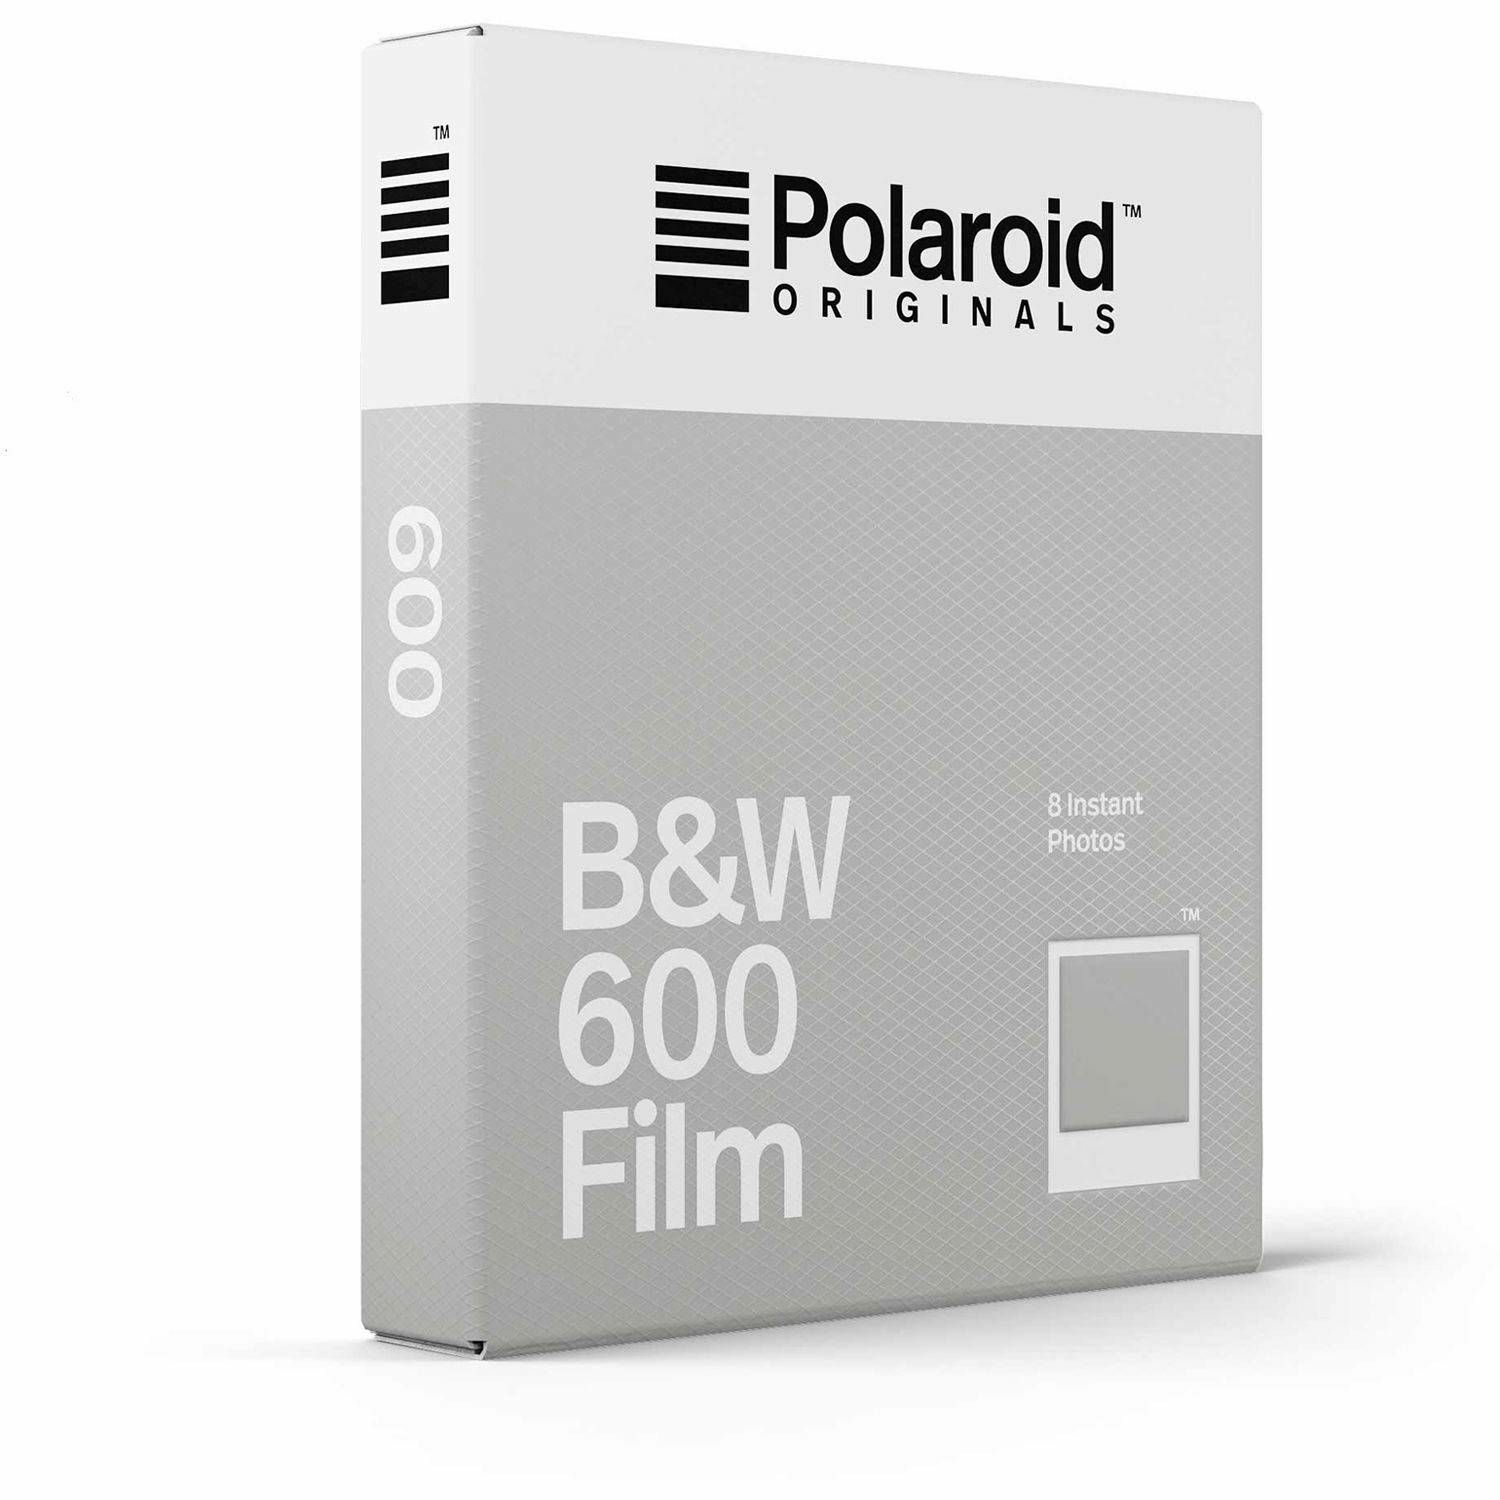 Polaroid Originals B&W Film for 600 Cameras papir za crno-bijele fotografije za Instant fotoaparate (006003)